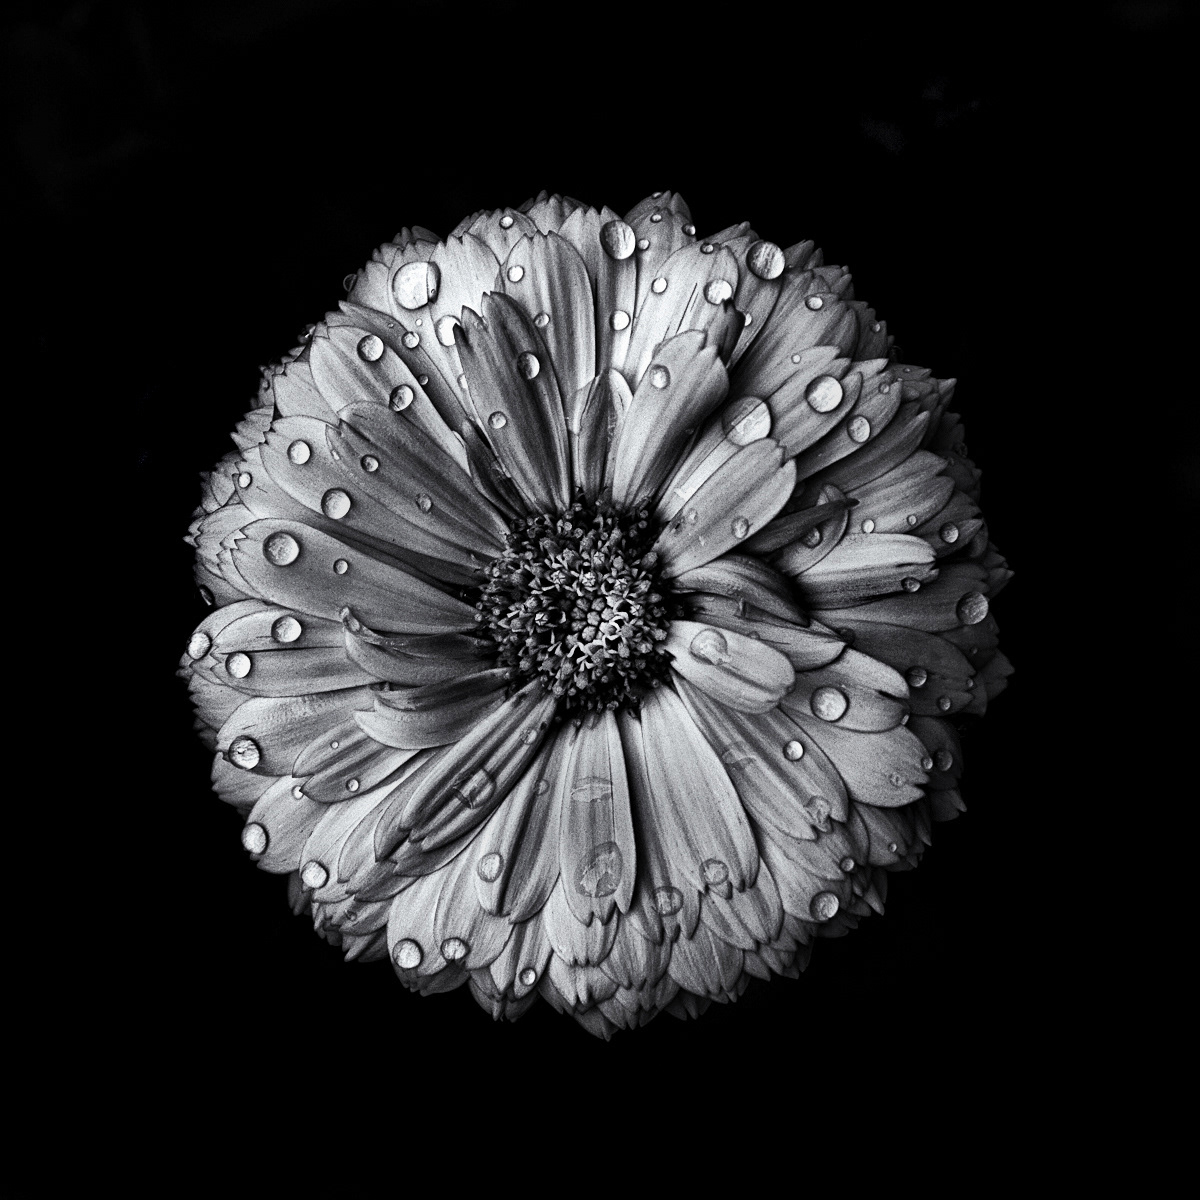 black and white contrast drops Flowers Liquid monochrome Nature pattern rain wet